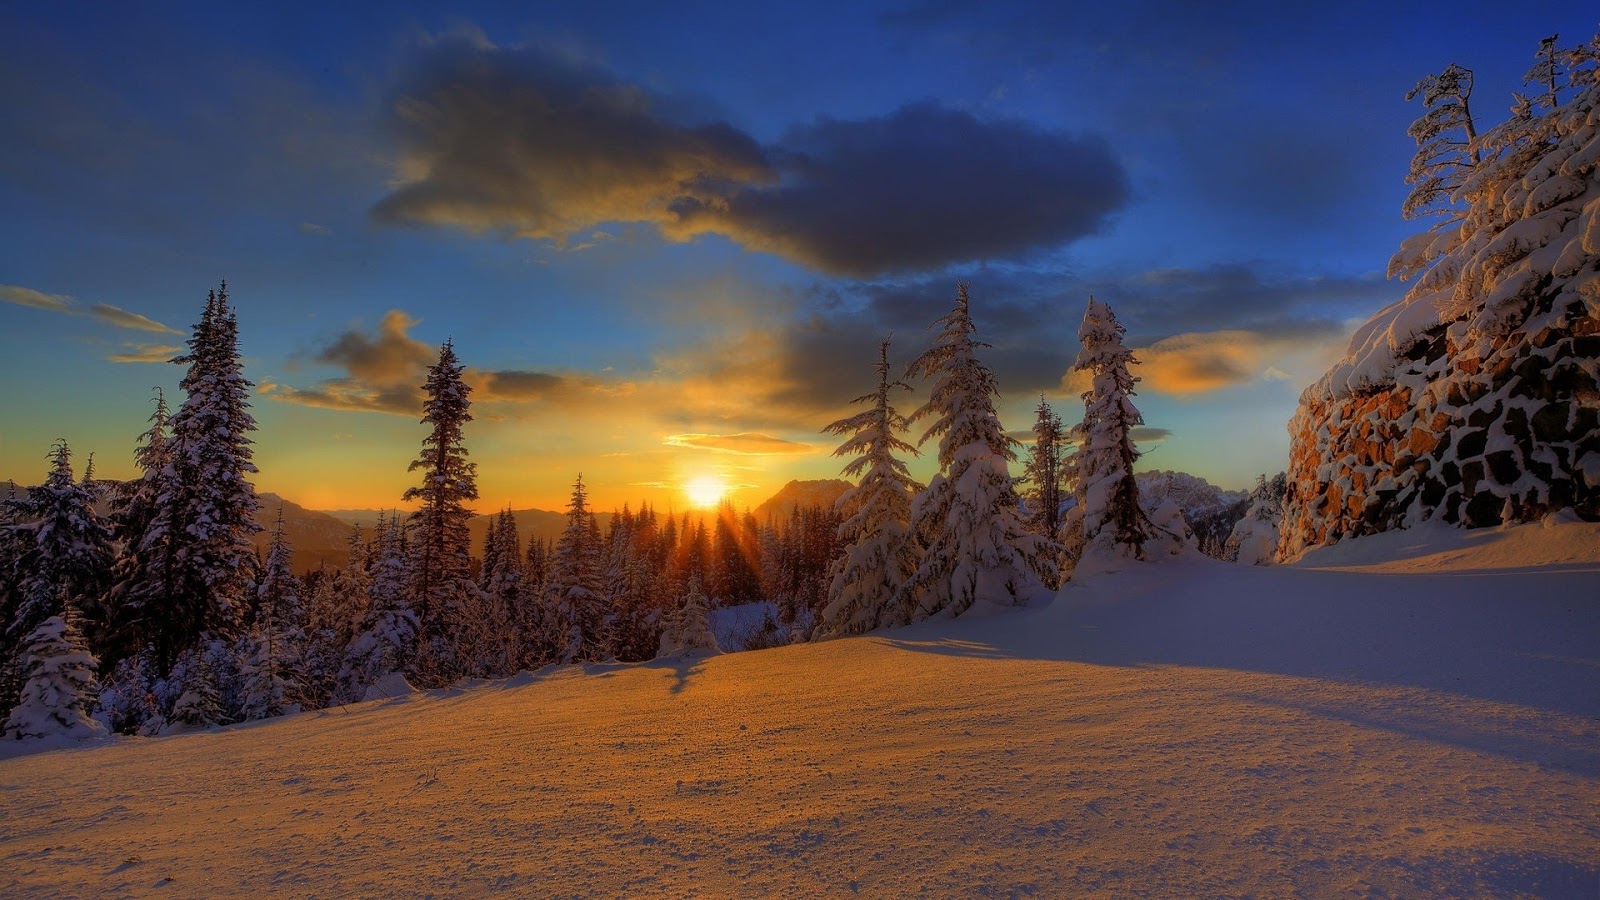 https://blogger.googleusercontent.com/img/b/R29vZ2xl/AVvXsEha6QcZZGSwAXOI0QI-VE6d1Grv-rg9yUhp1BfpecY9GvgE2GKPuDFesSuem8g0qK59aXXO0Unw9s7wmRWypI4EbMRnRg3pzQw3vWwo3E2c2Op7fSIDaBZTDBRtOcTC2mLYXYV9unMqAhA/s1600/forest-winter-sunset-windows-8-wallpaper-1920x1080.jpg